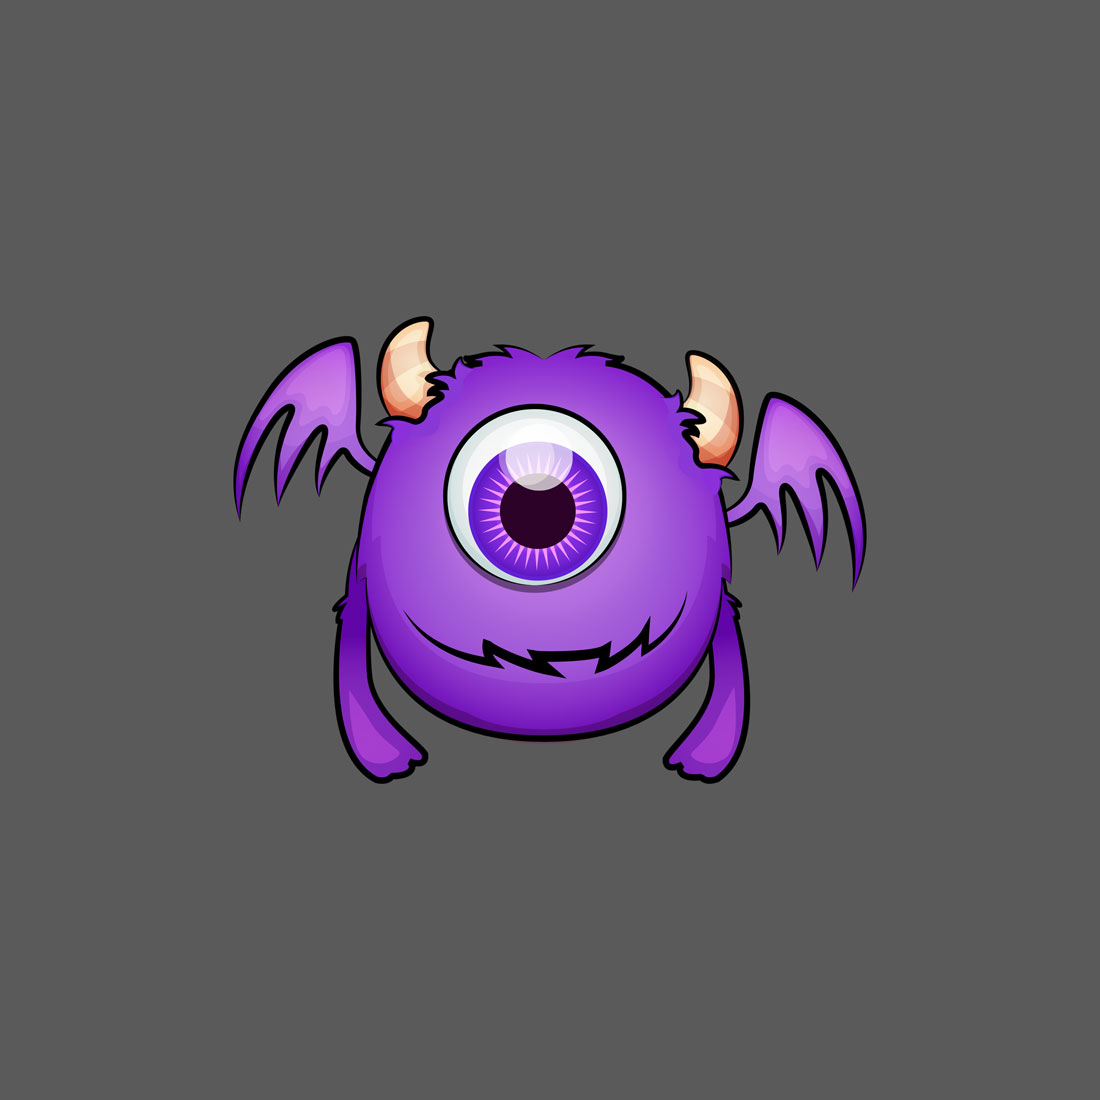 2D mobile game purple monster design